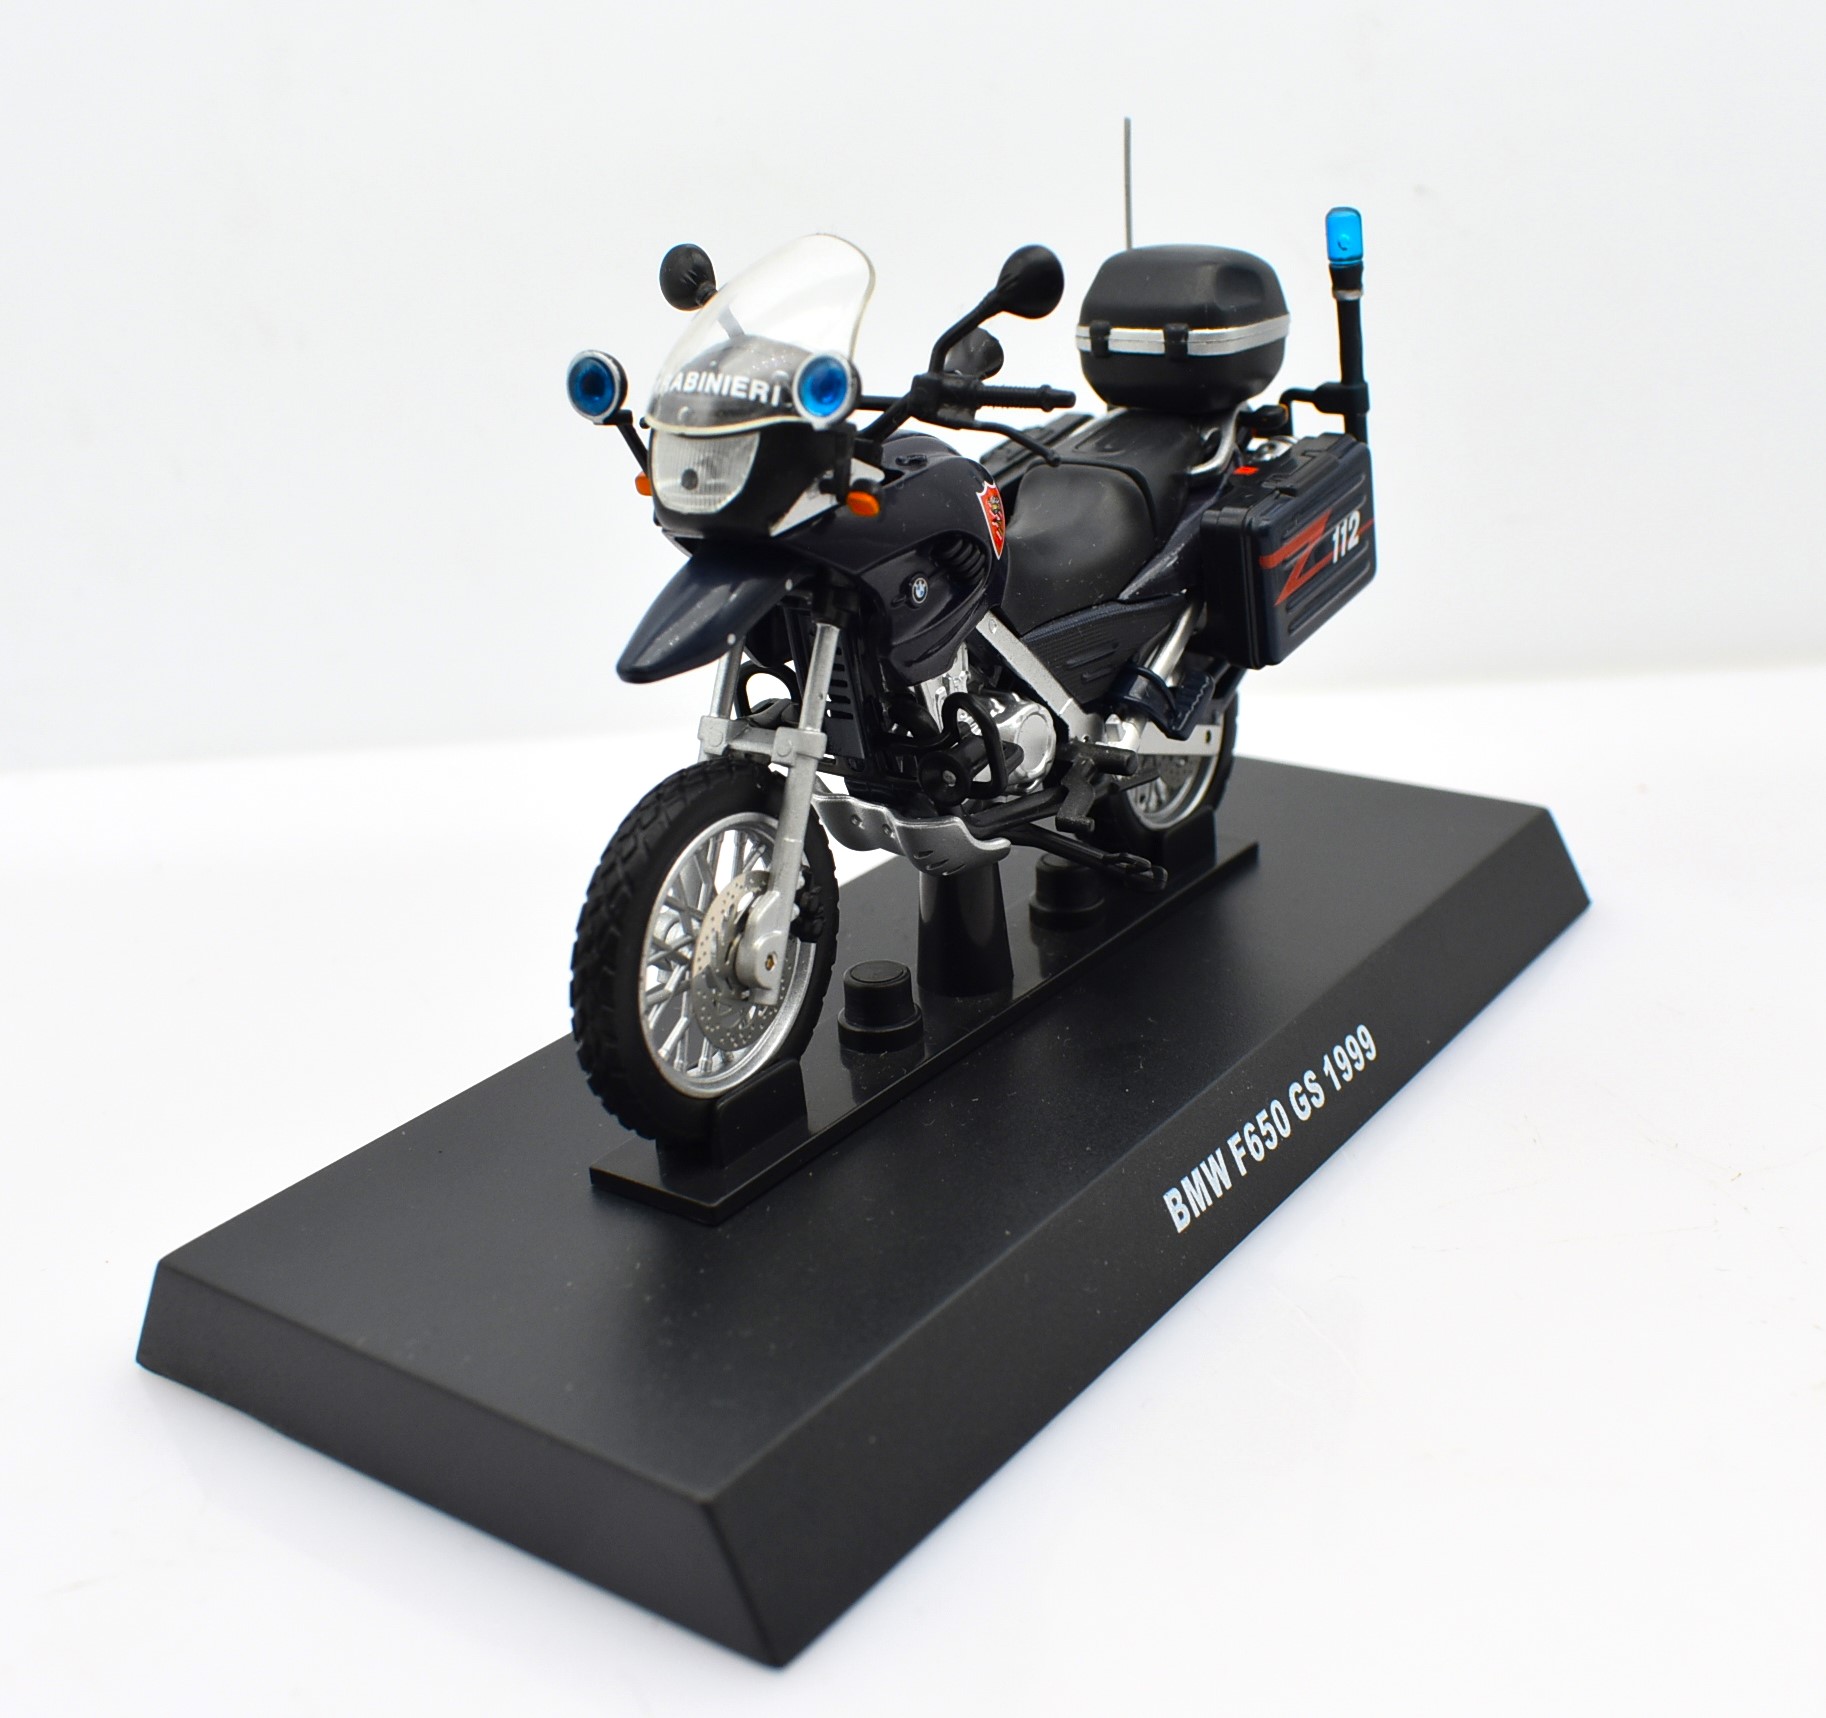 Carabinieri motorcycle model collectionvehiclesdiecast